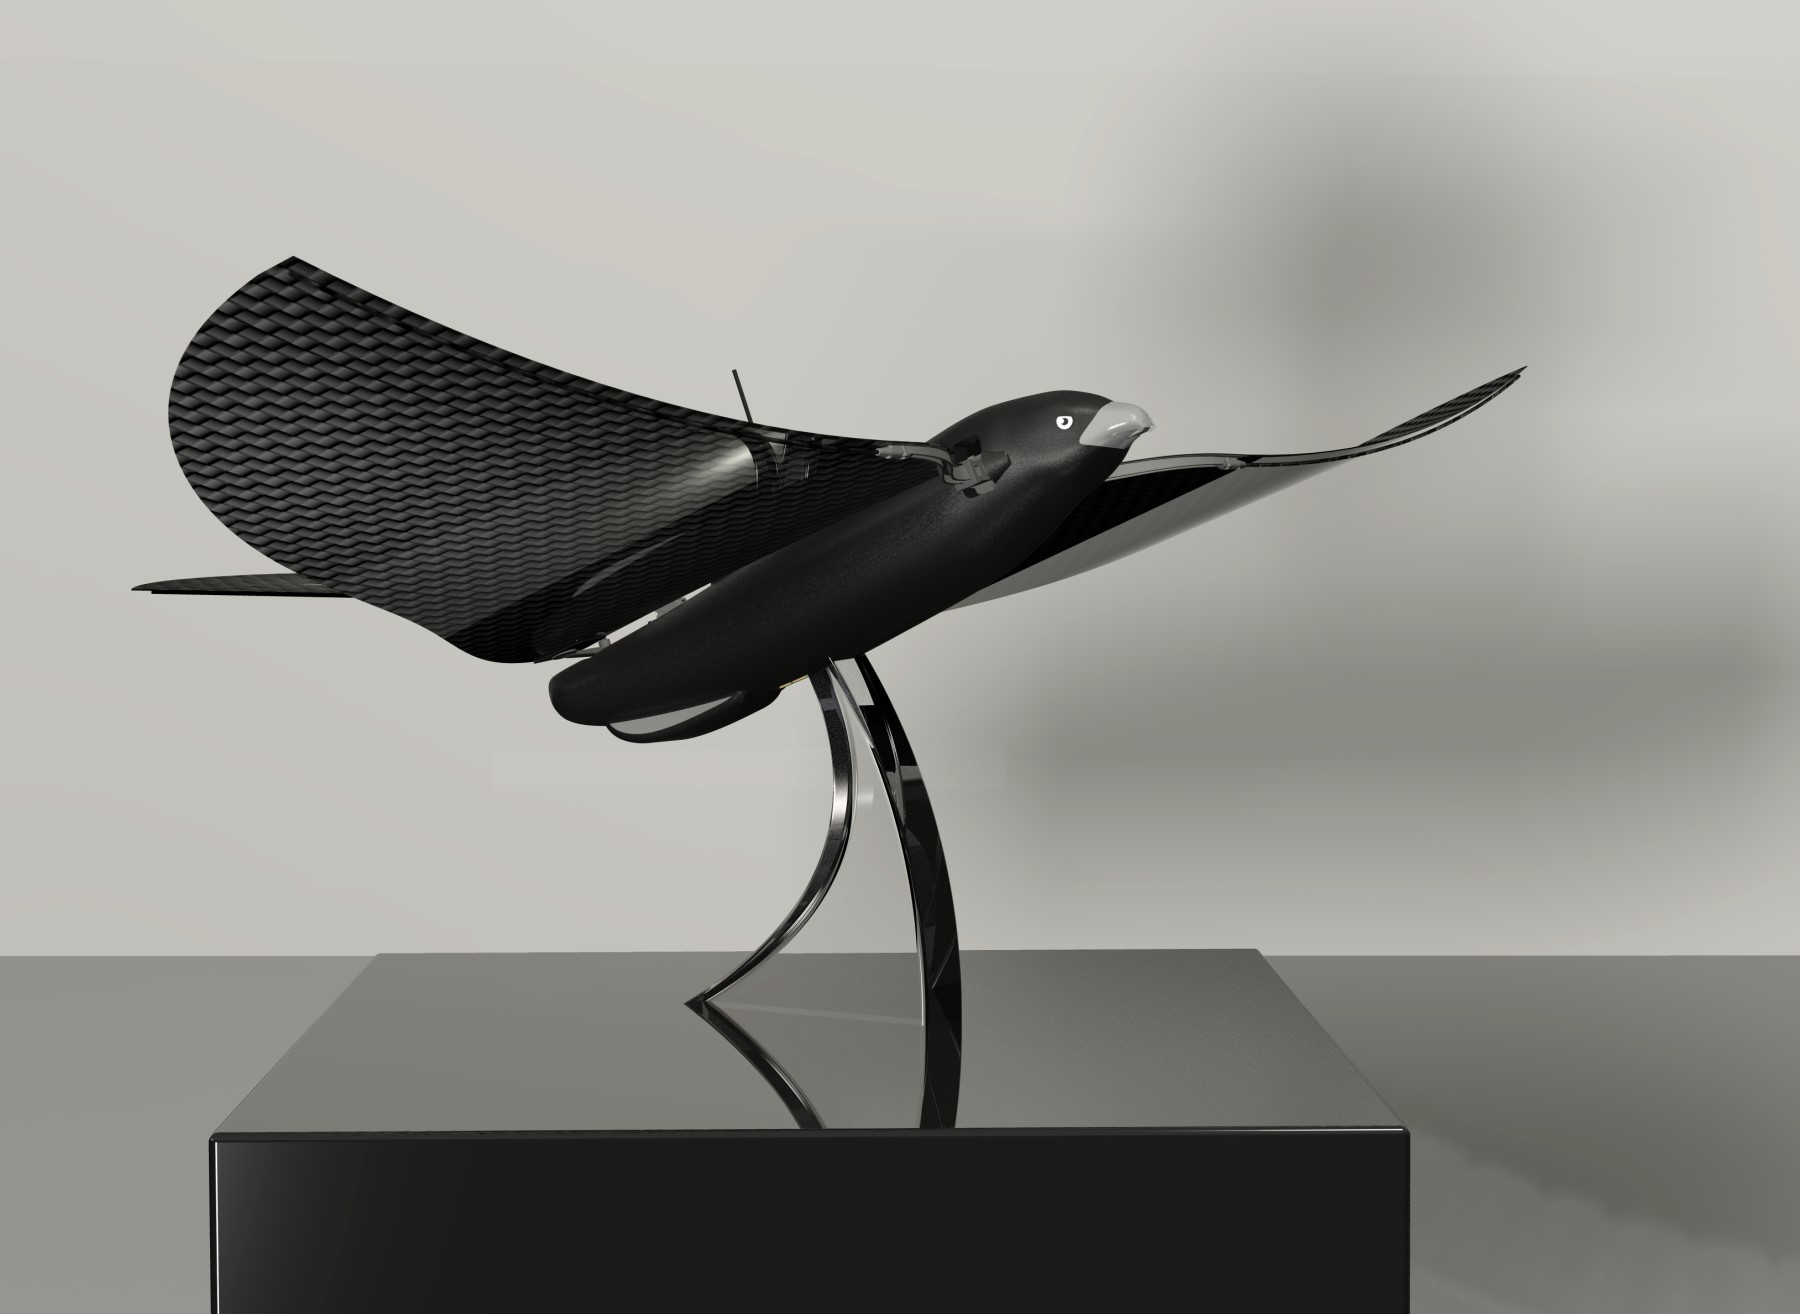 The Bionic Bird drone model